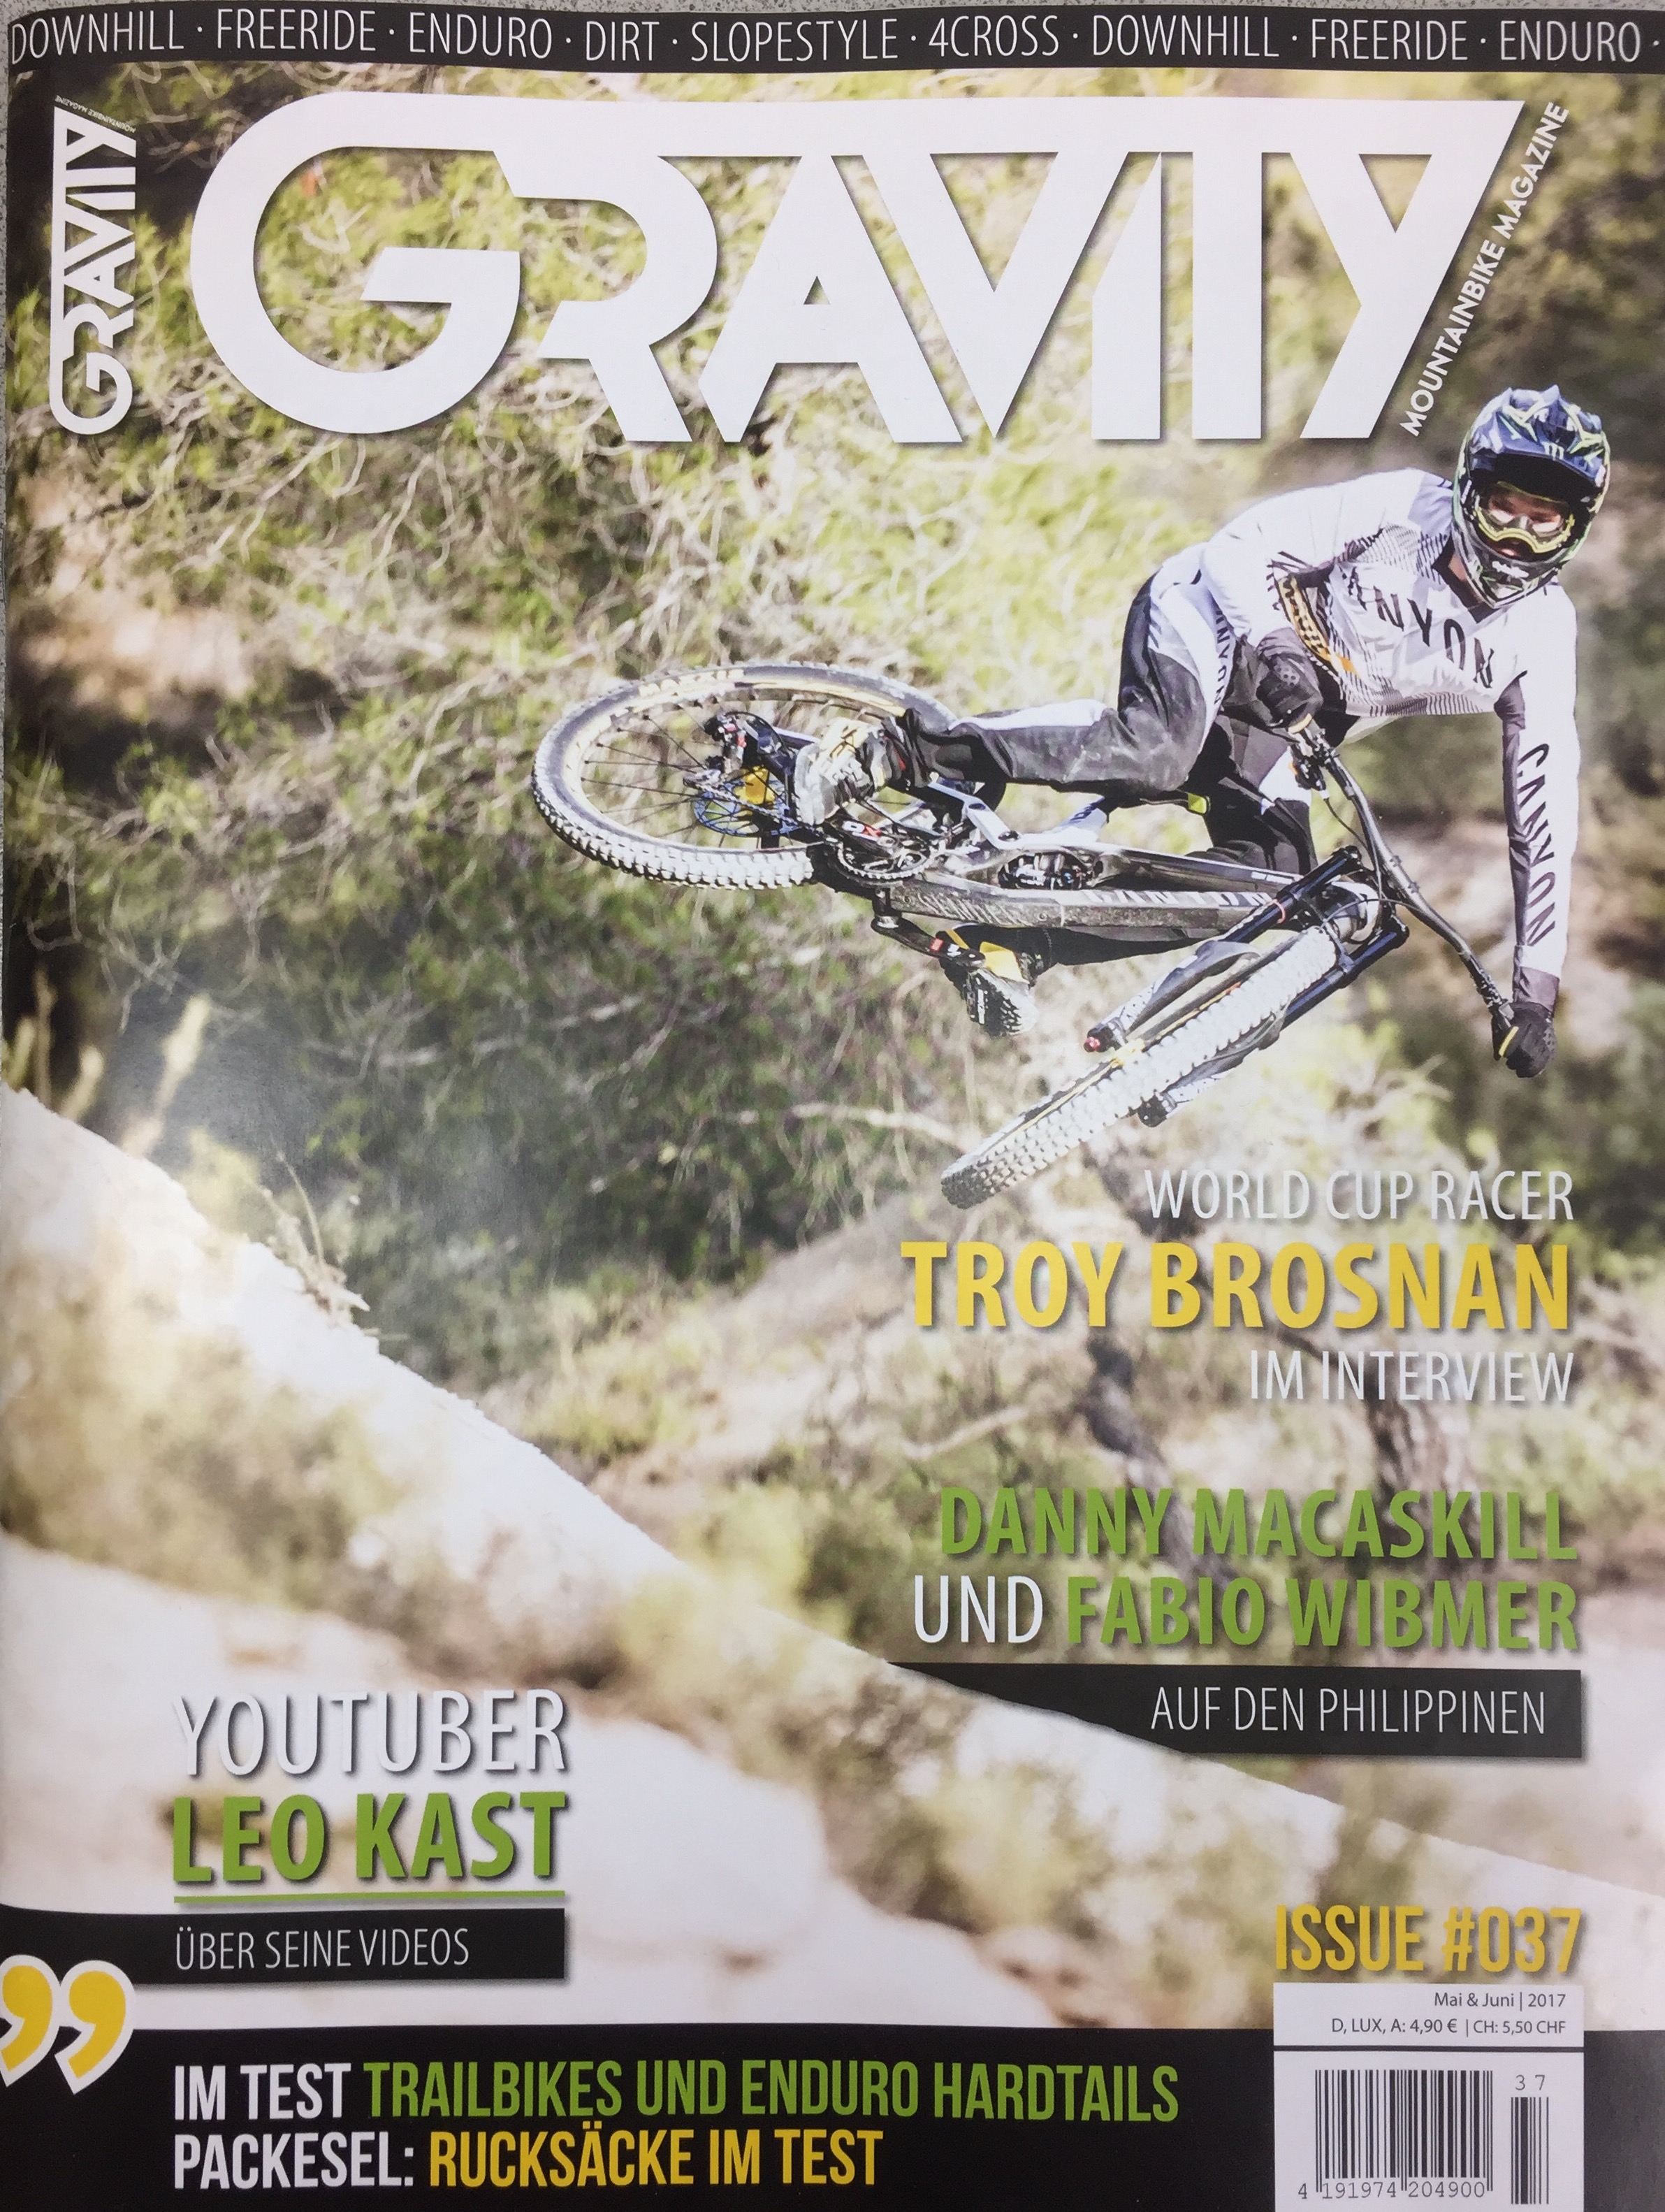 Testbericht Summitrider X12 Enduro Gravity Magazine